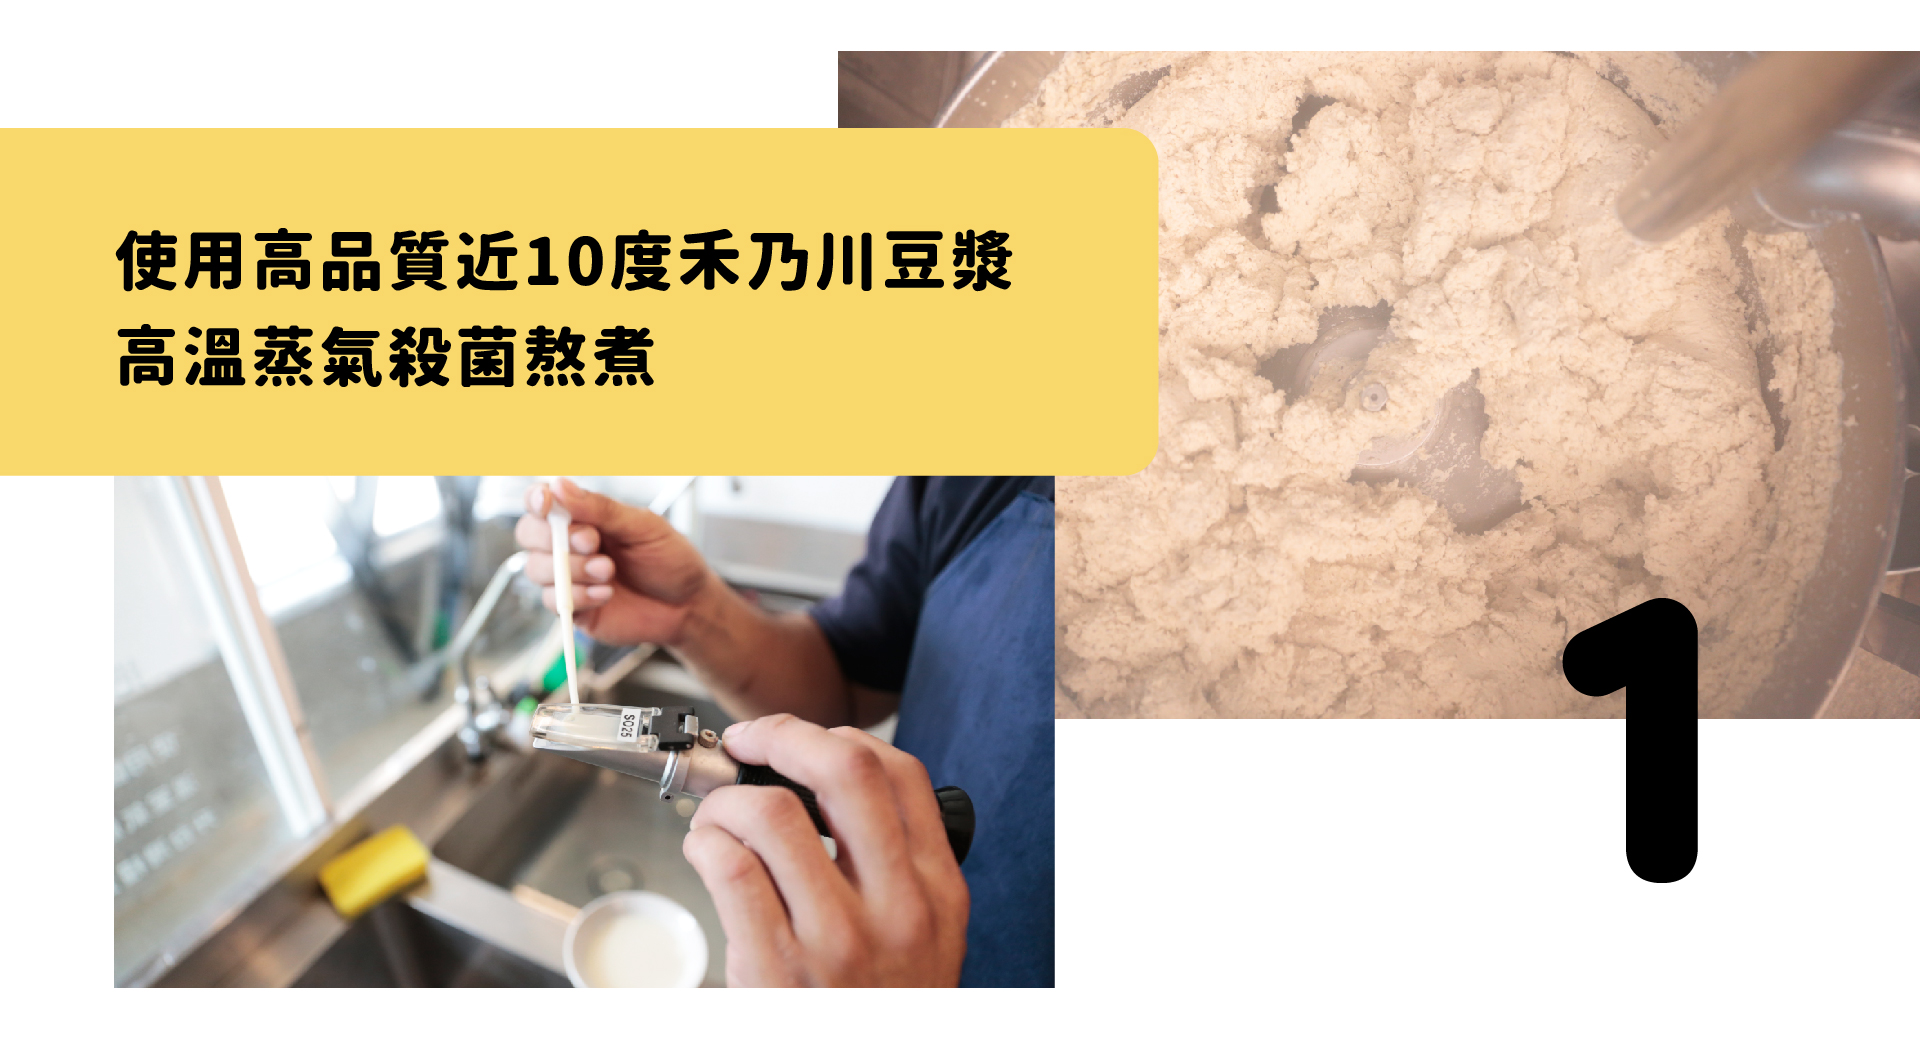 The rich soybean fragrance, accompanied with the distinctive sweetness of black soybean | Taiwan domestic non-GMO soy milk shop | HIDEKAWA